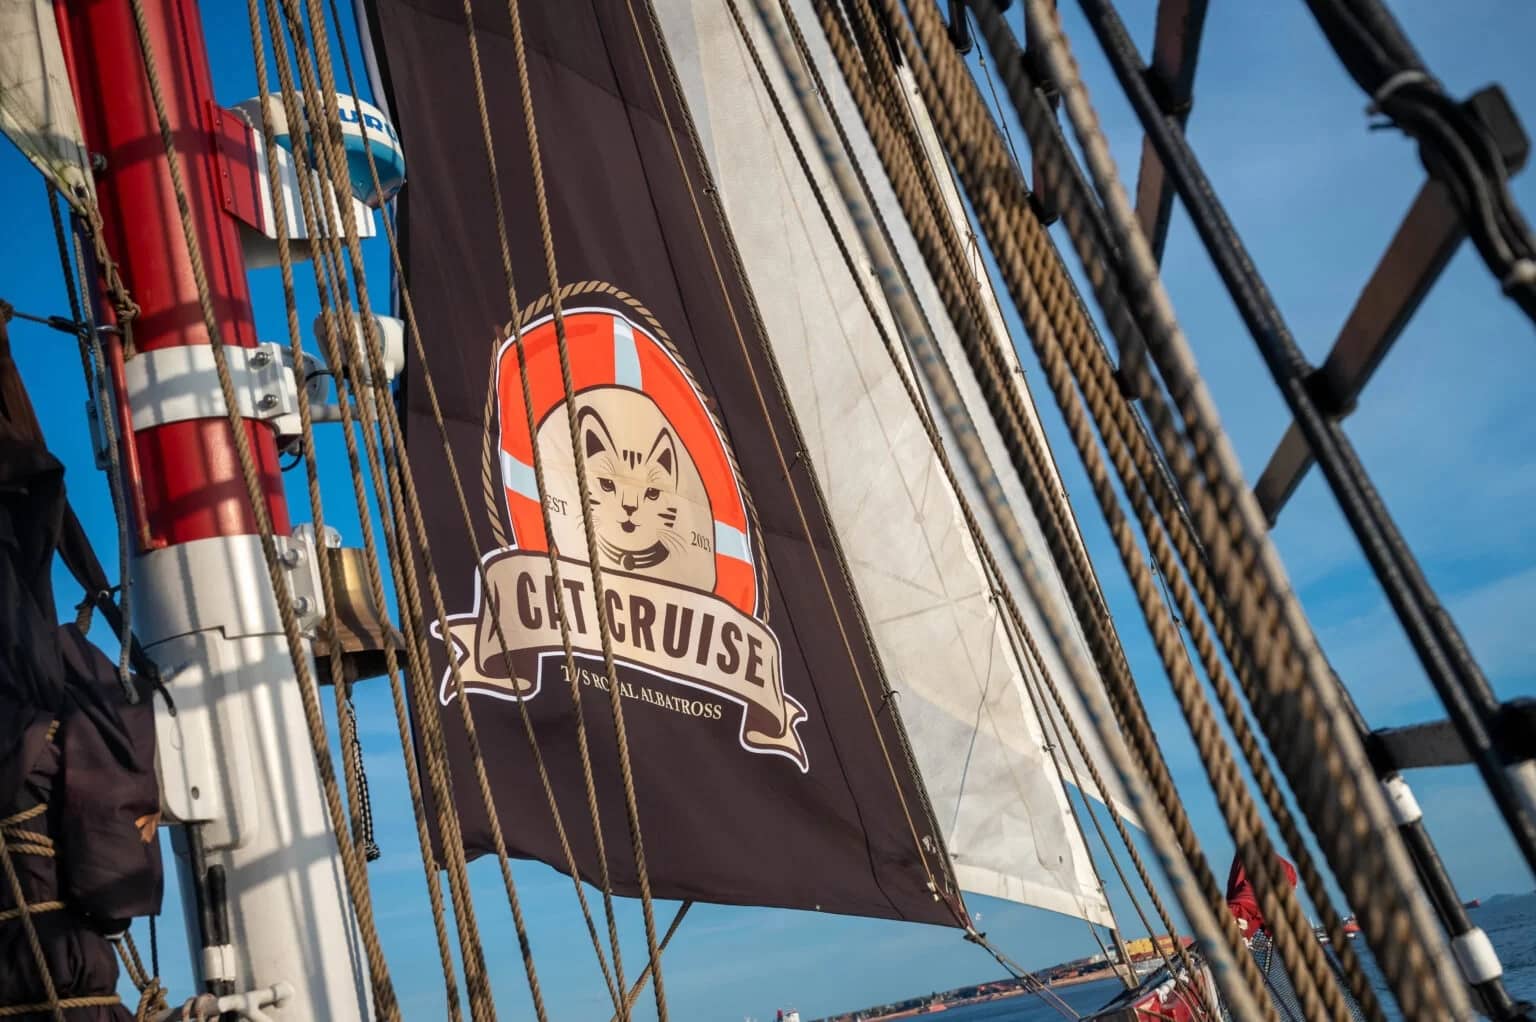 Royal Albatross Cat Cruise